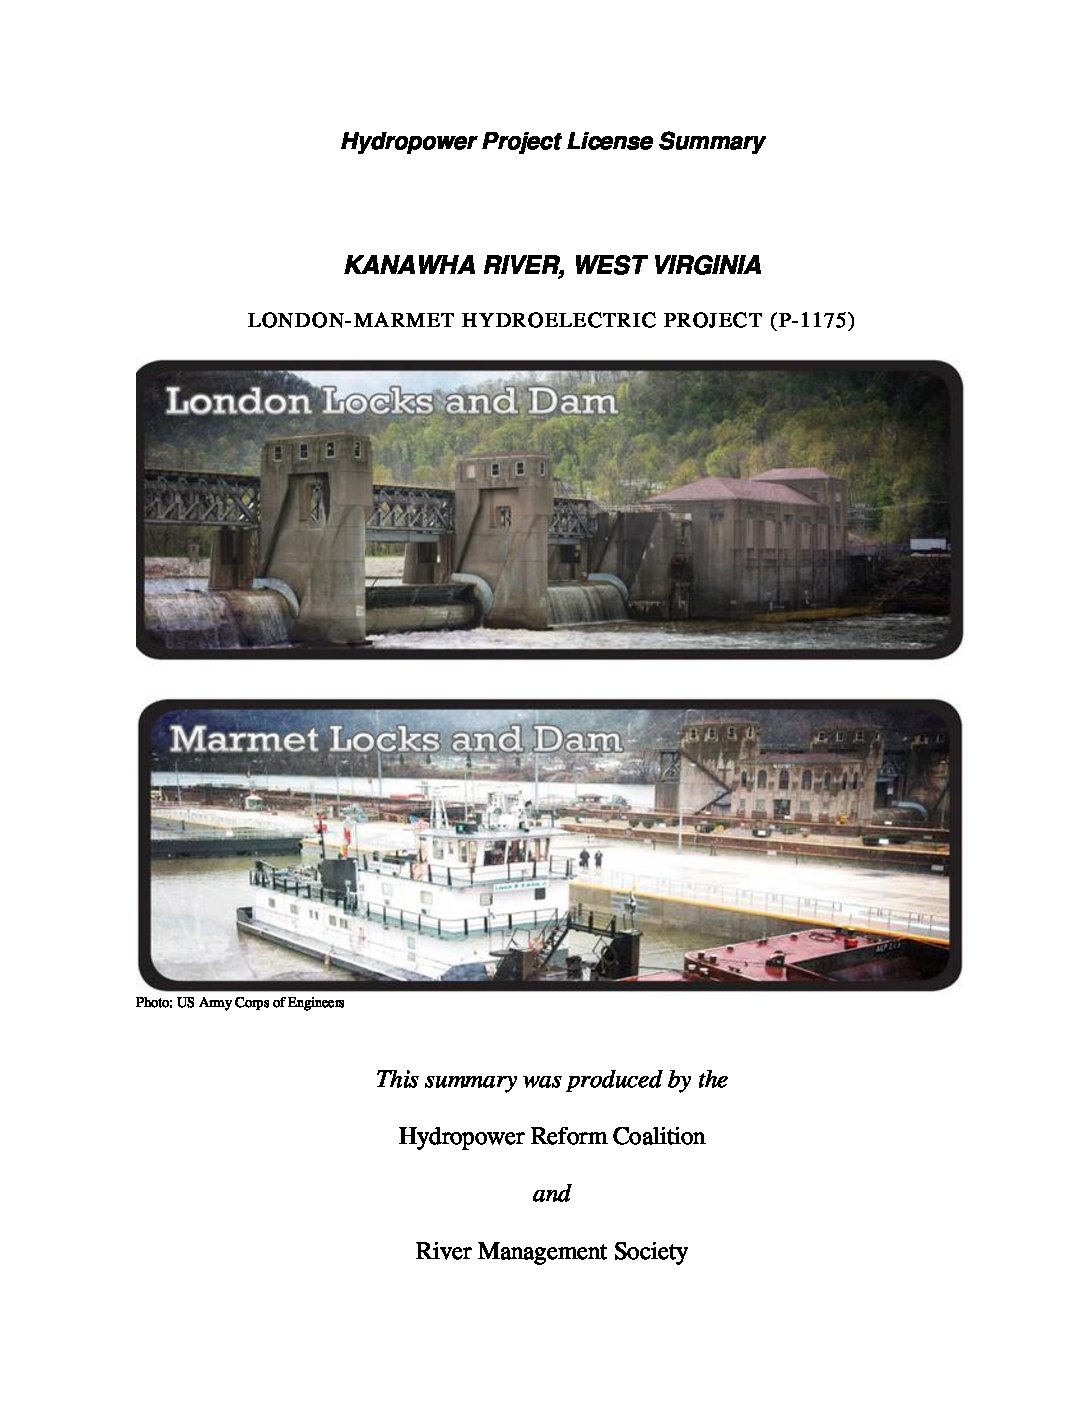 London-Market Project, Kanawha River, West Virginia